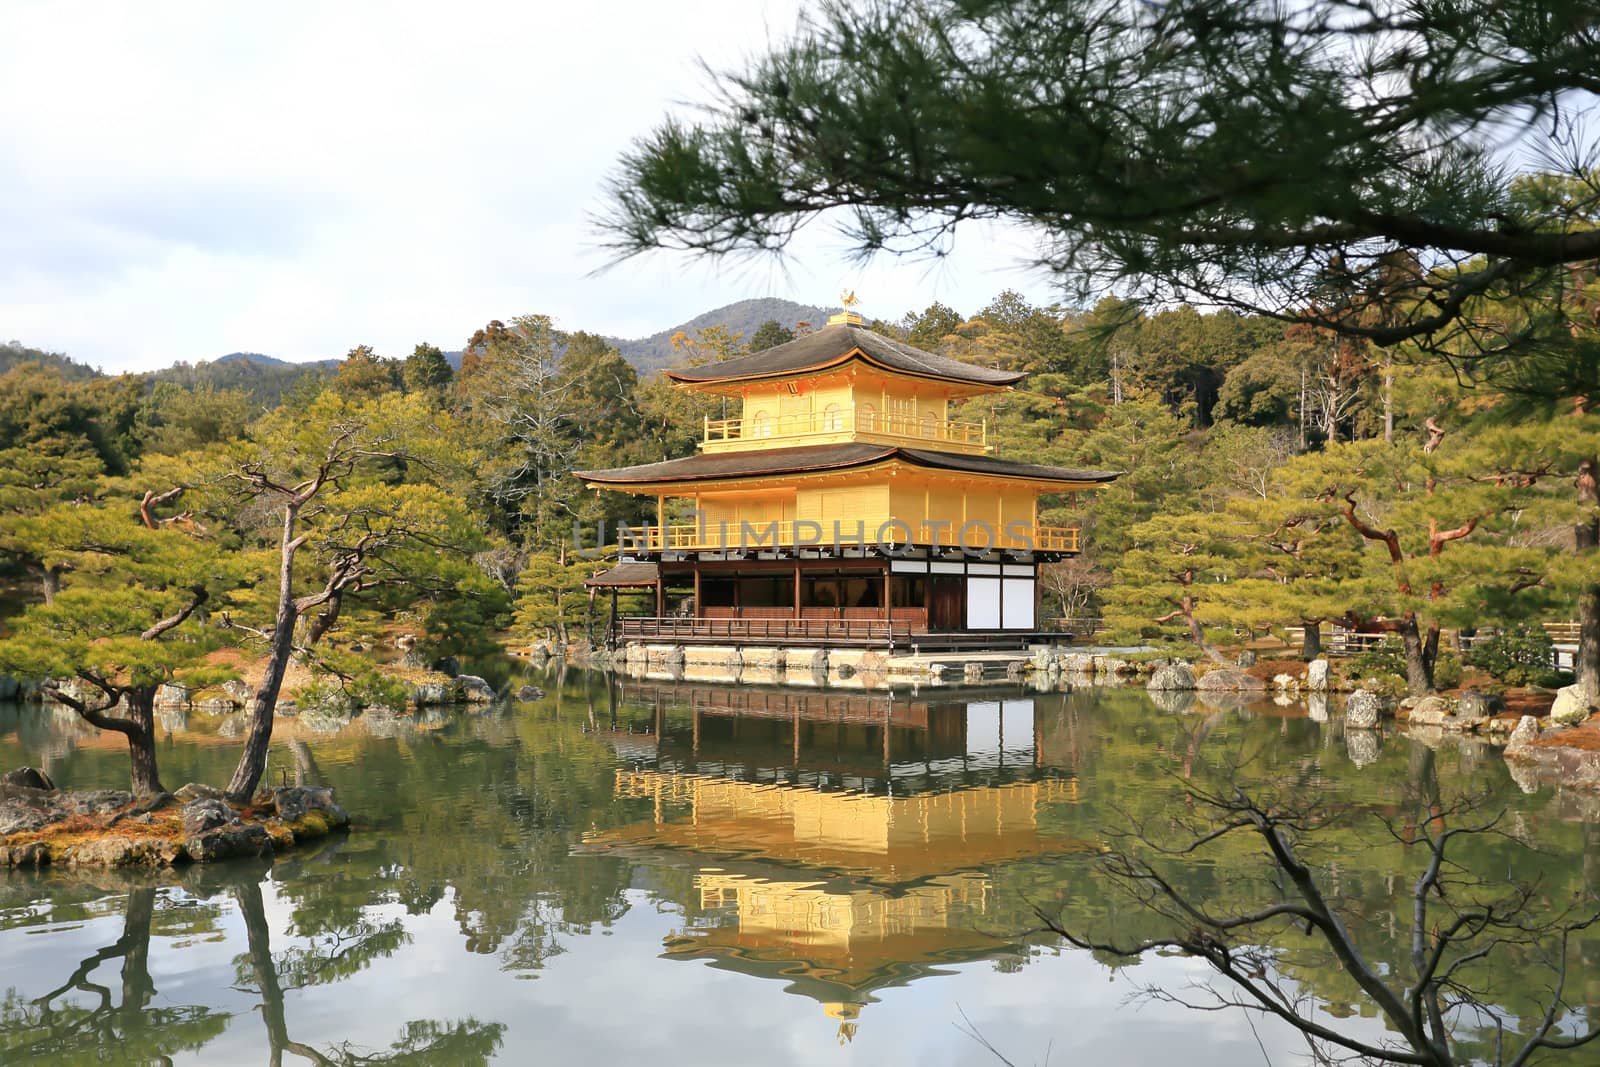 Kinkakuji Temple (The Golden Pavilion) famous place in Kyoto, Japan